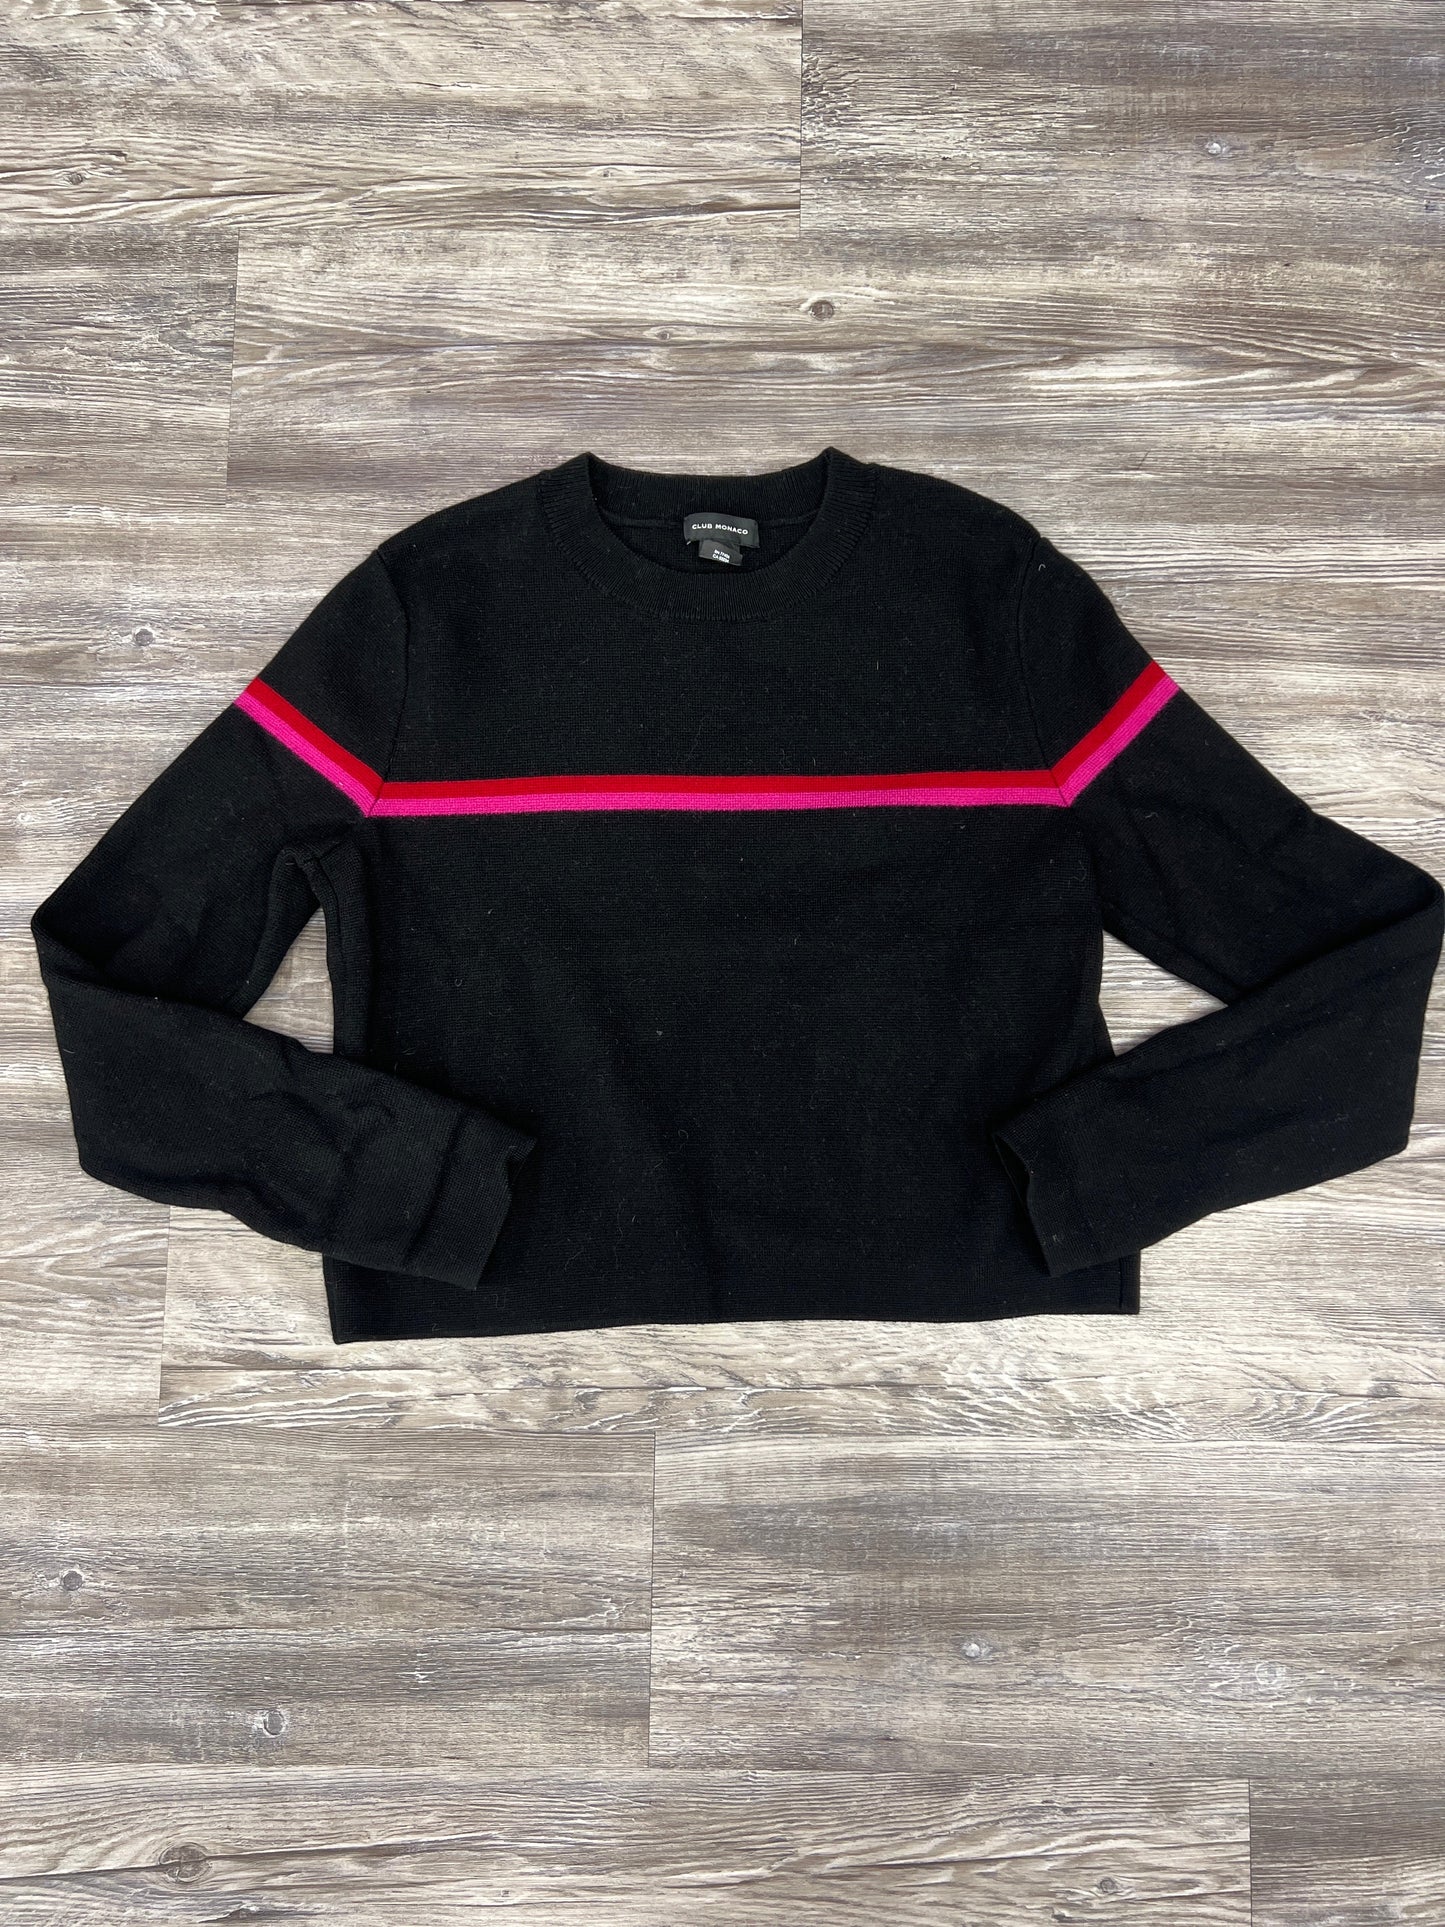 Sweater By Club Monaco Size: L